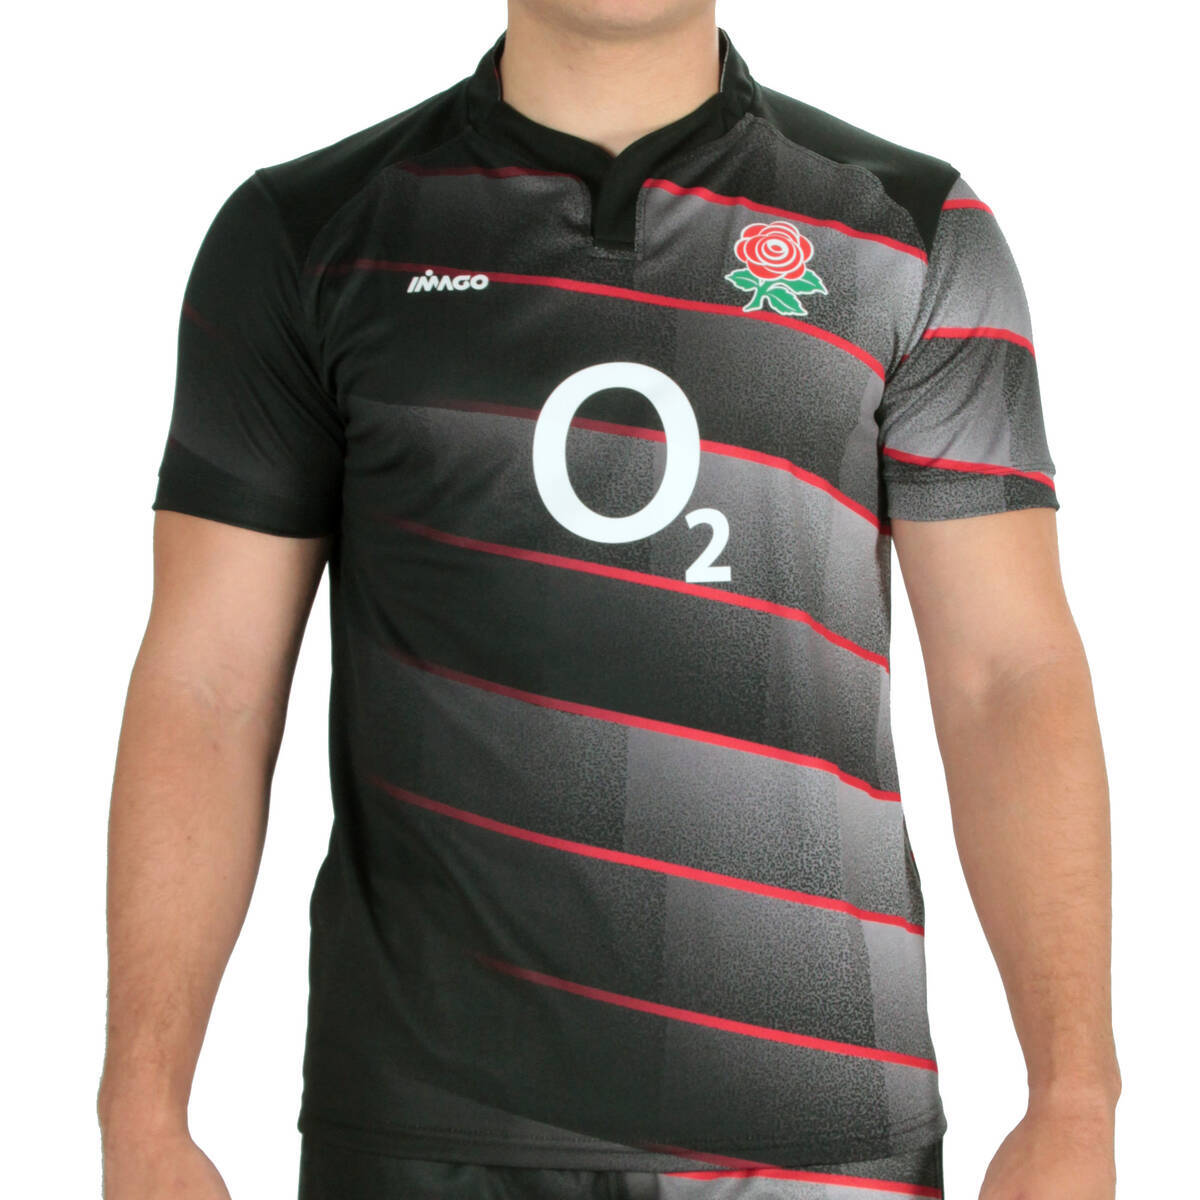 Imagen producto Camiseta Rugby England 13